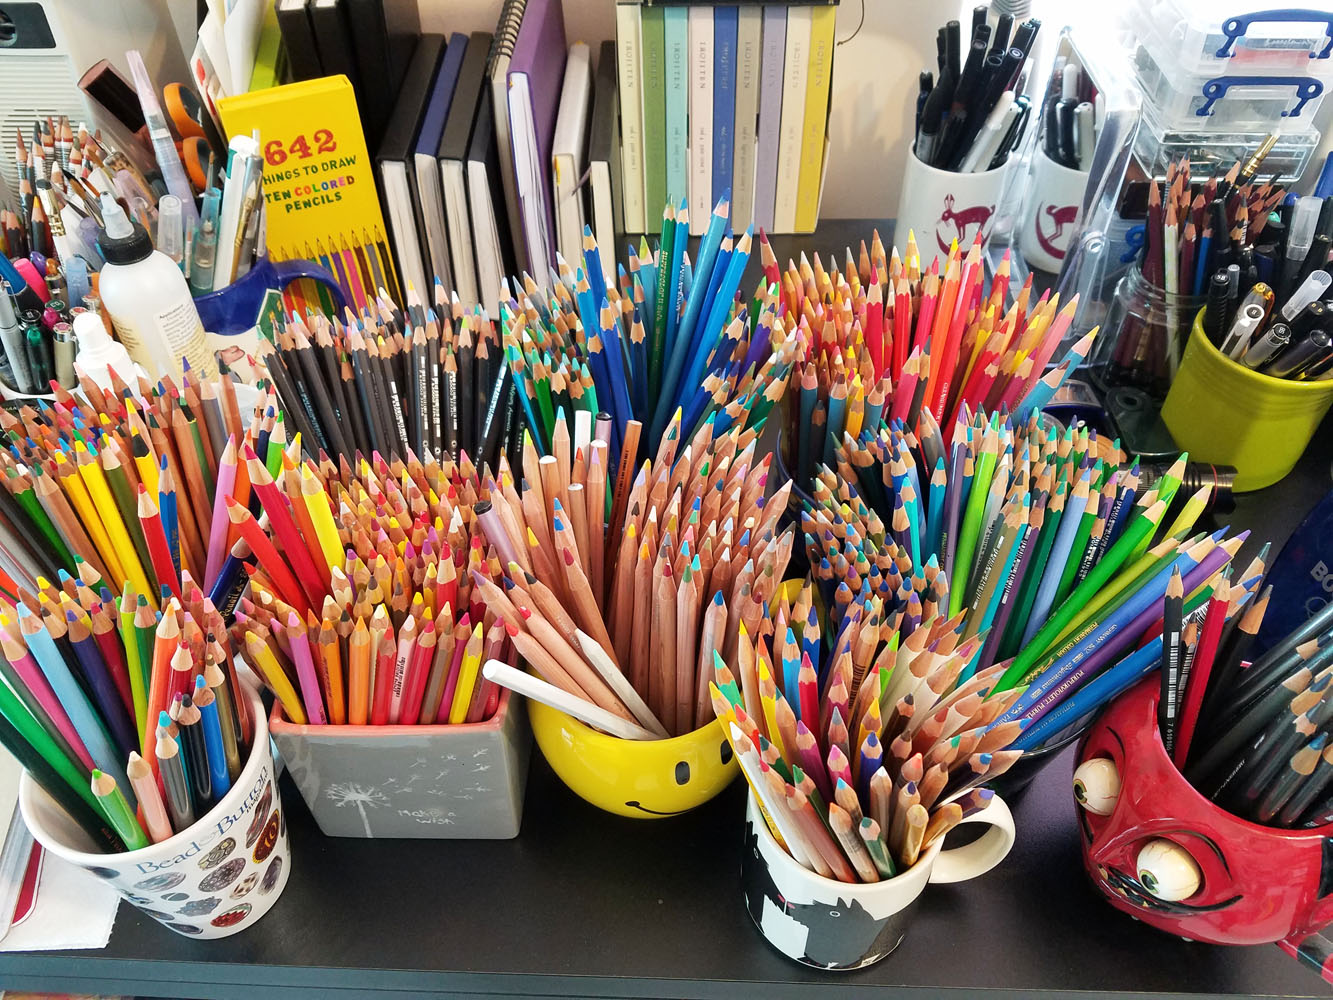 Posca Oil and Wax Coloring Pencils Art Set, 36 Prismacolor Colored Pencils,  Drawing Supplies, Color Pencils, Watercolor Pencils, Colored Pencils for